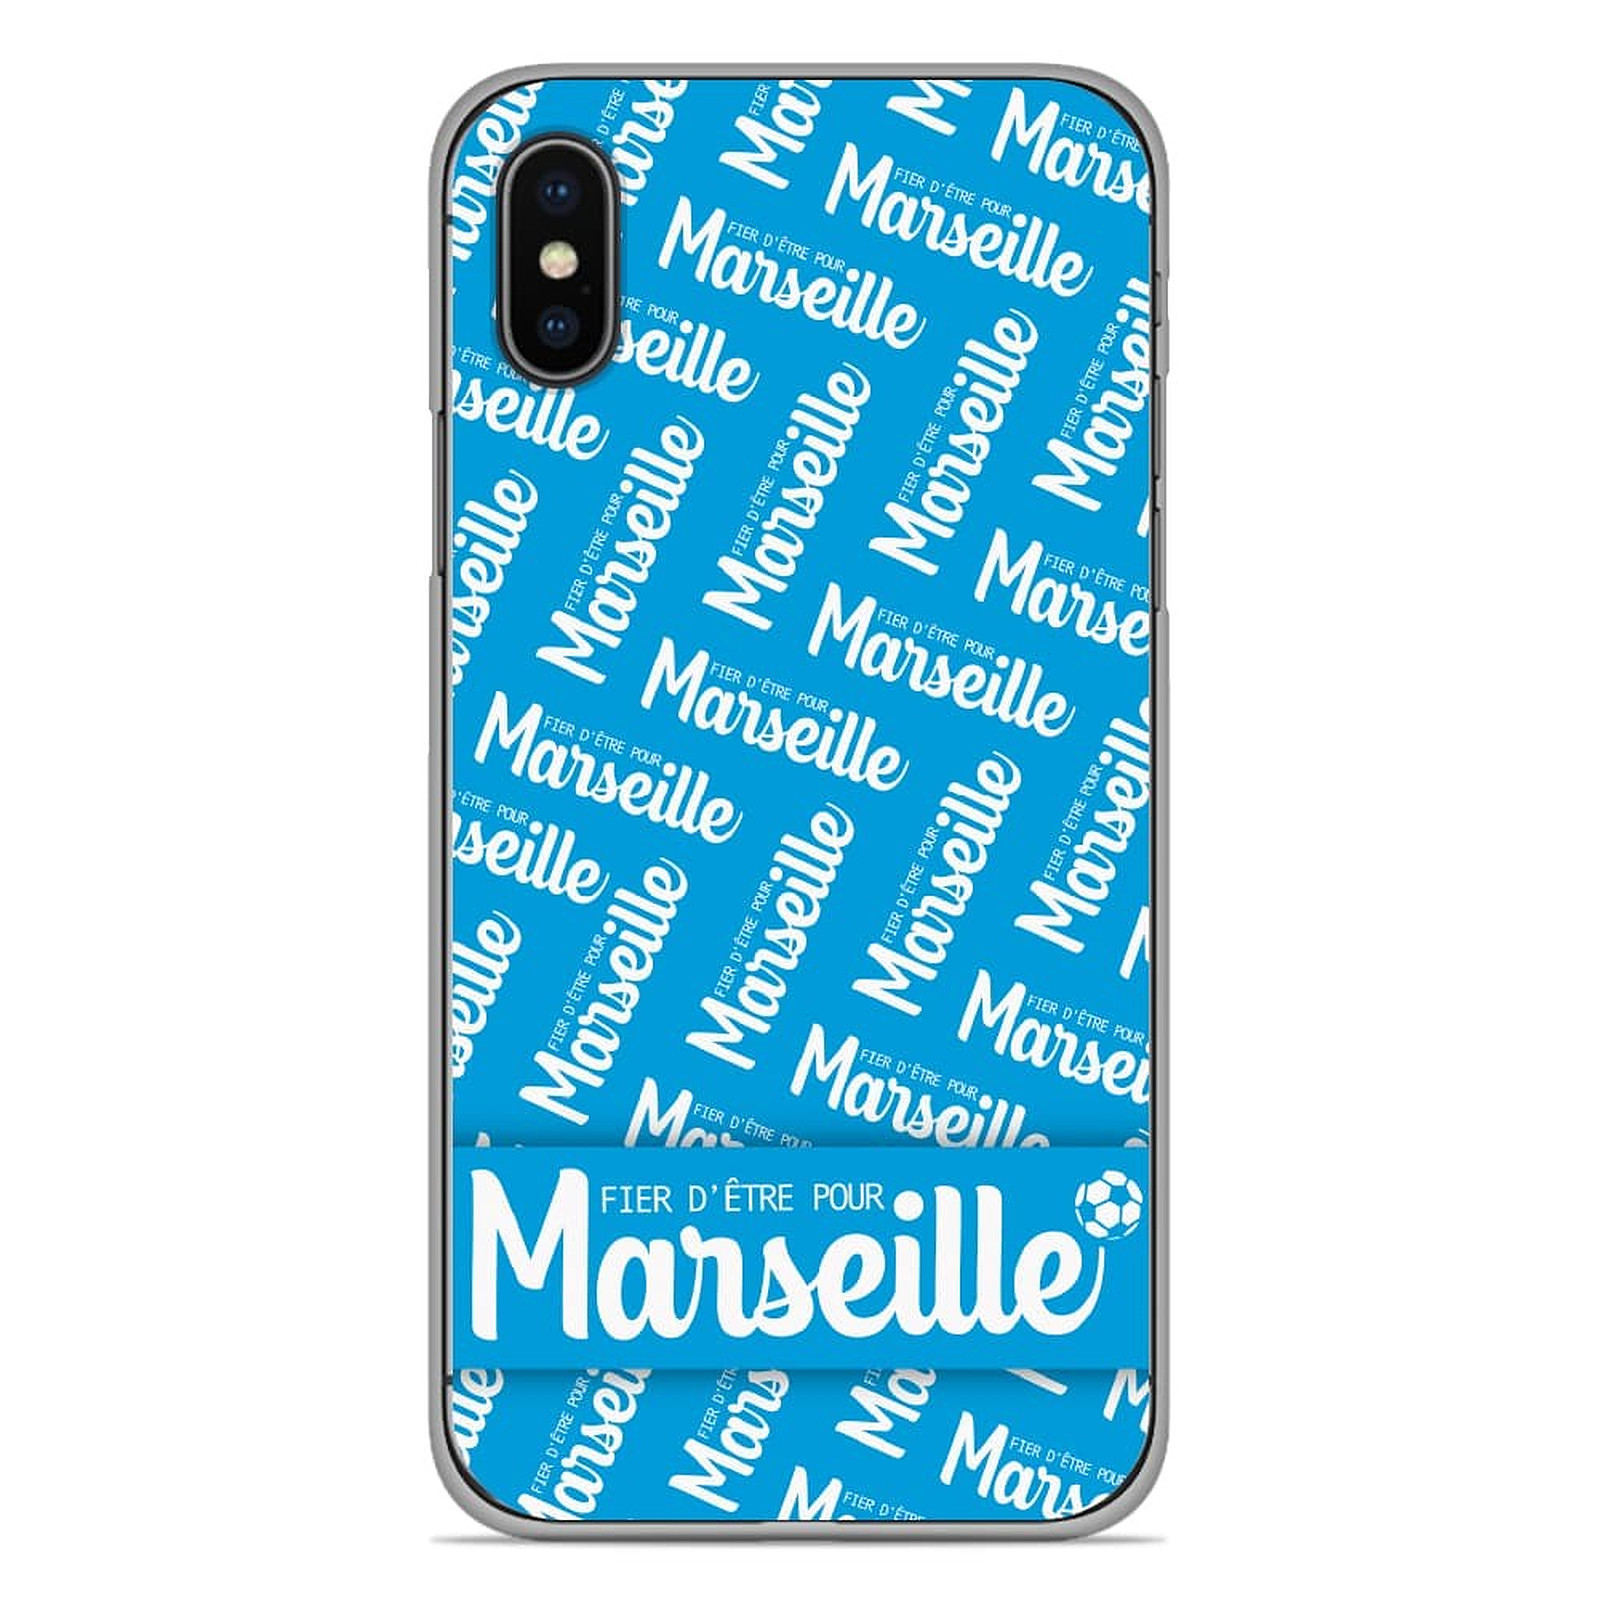 1001 Coques Coque silicone gel Apple iPhone XS Max motif Fier d'etre pour Marseille - Coque telephone 1001Coques